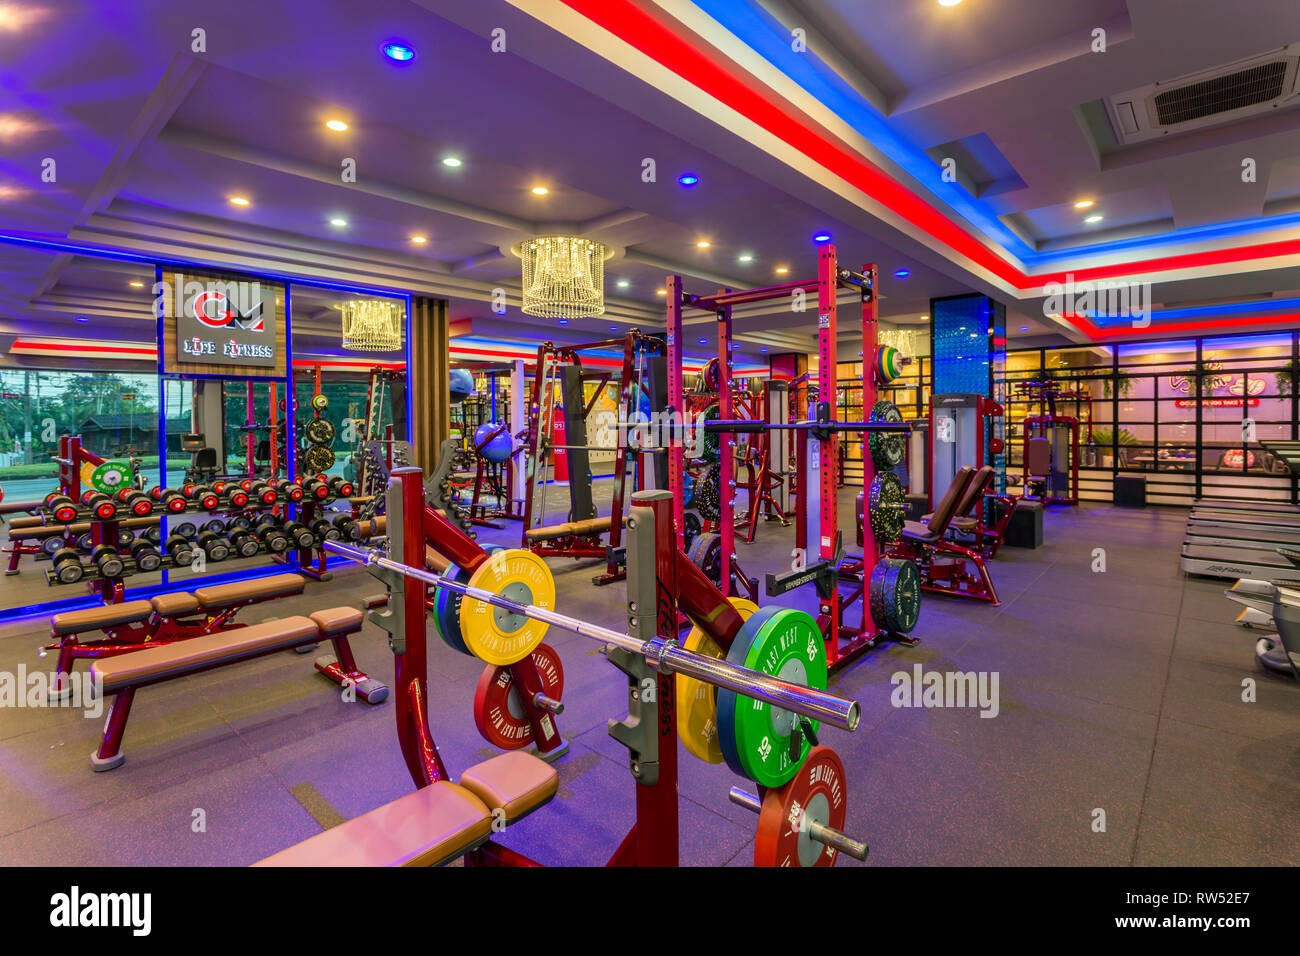 GM Life Fitness health club interior room fitness equipment and exercise machine in Krabi, Stock Photo - Alamy